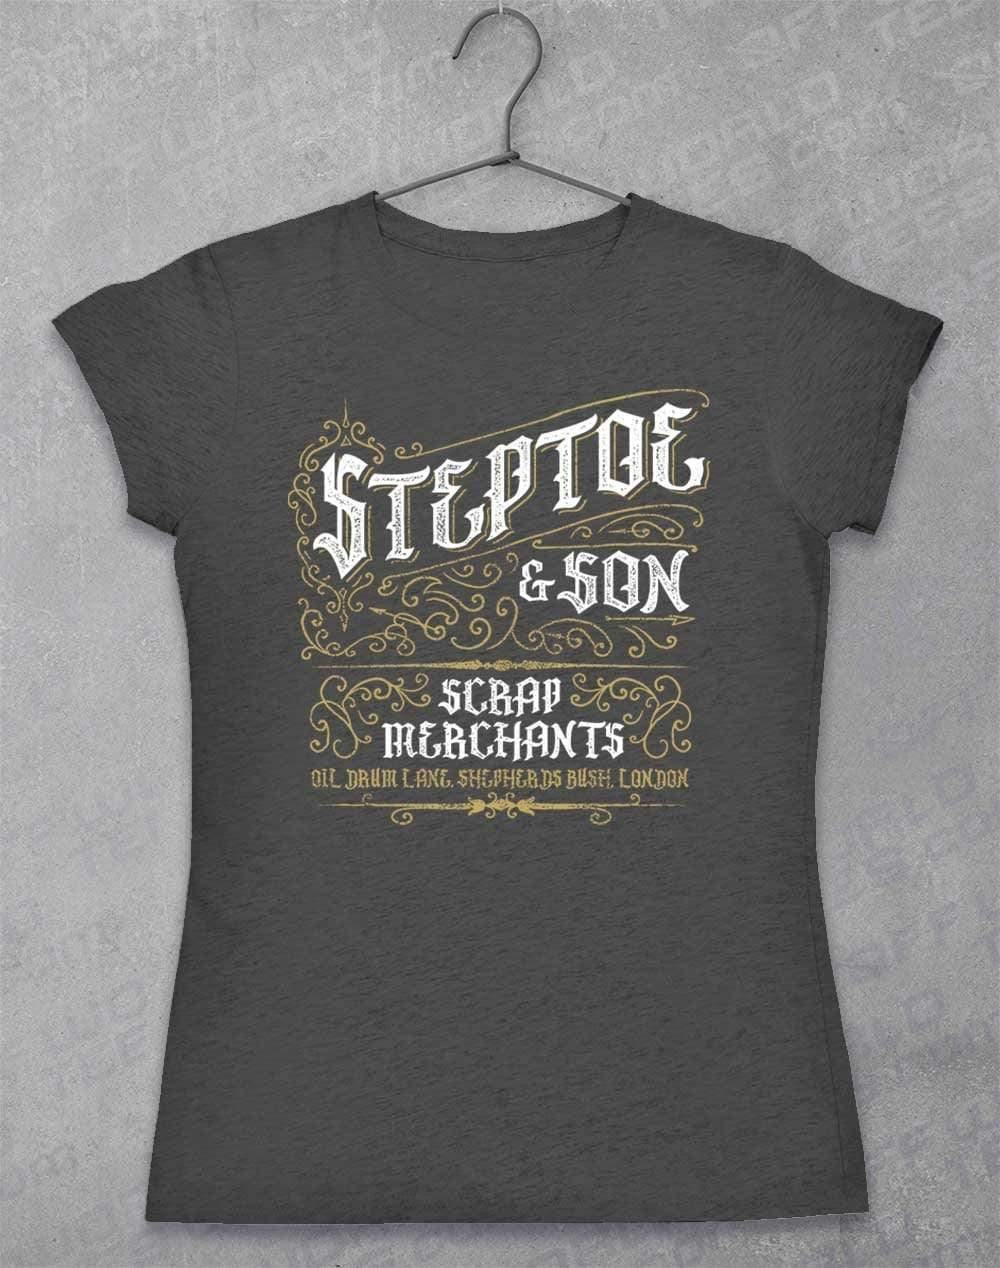 Steptoe & Son Scrap Merchants Womens T-Shirt 8-10 / Dark Heather  - Off World Tees